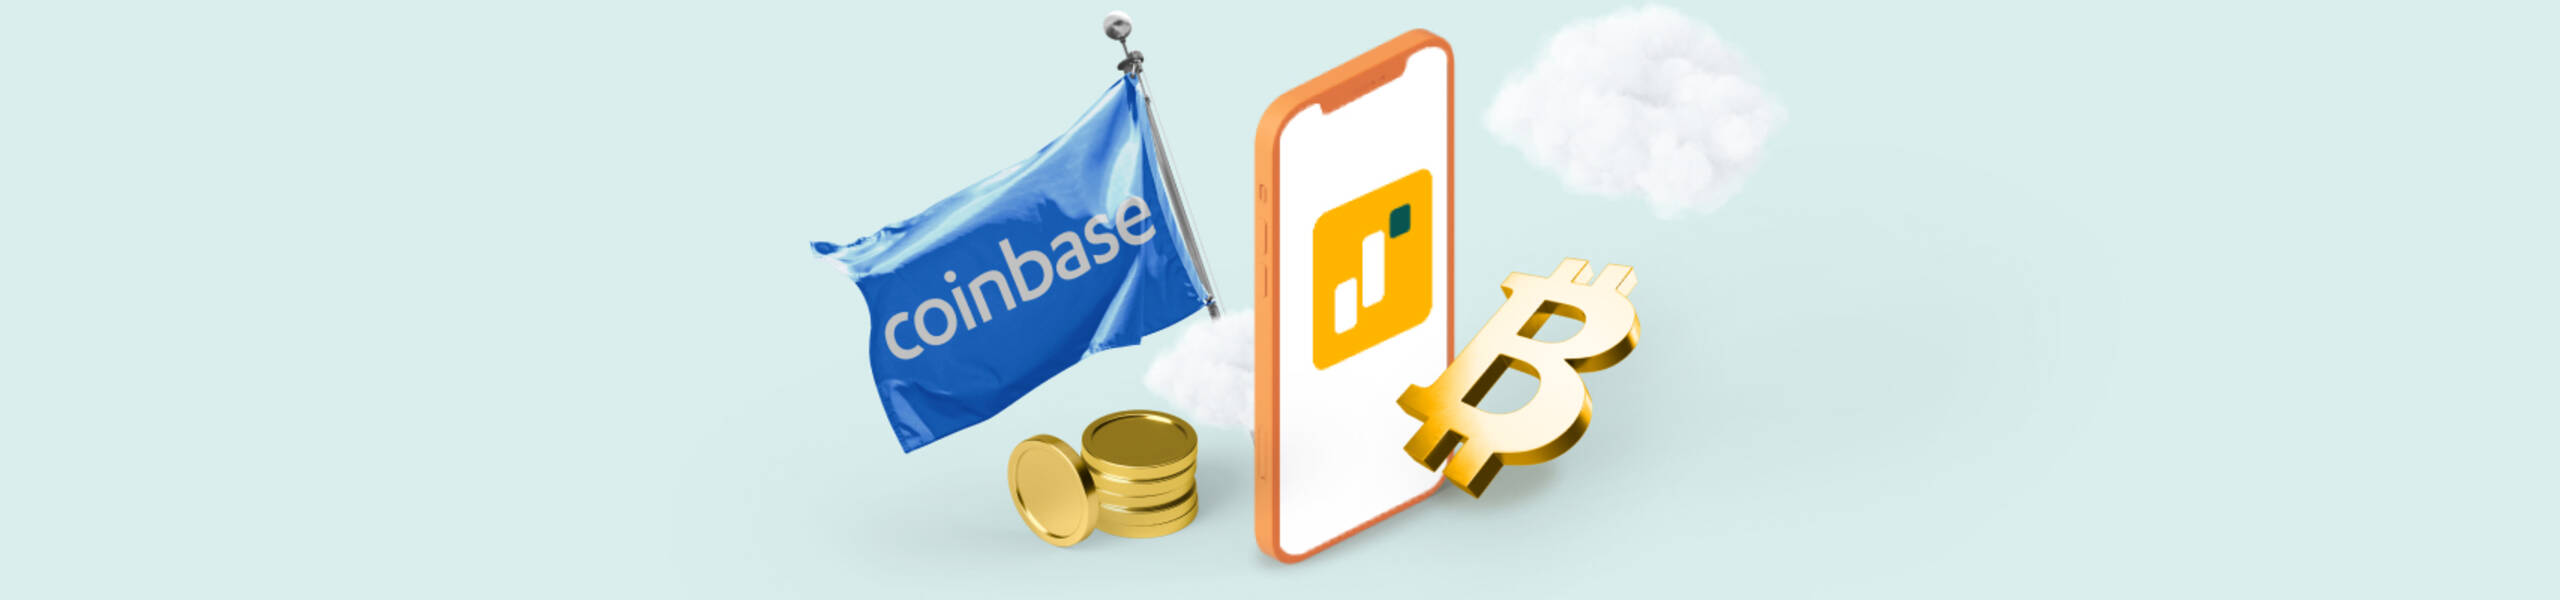 Coinbase: دليلك الشامل للتداول على أكبراكتتاب عام أولي «IPO» للعملات الرقمية.